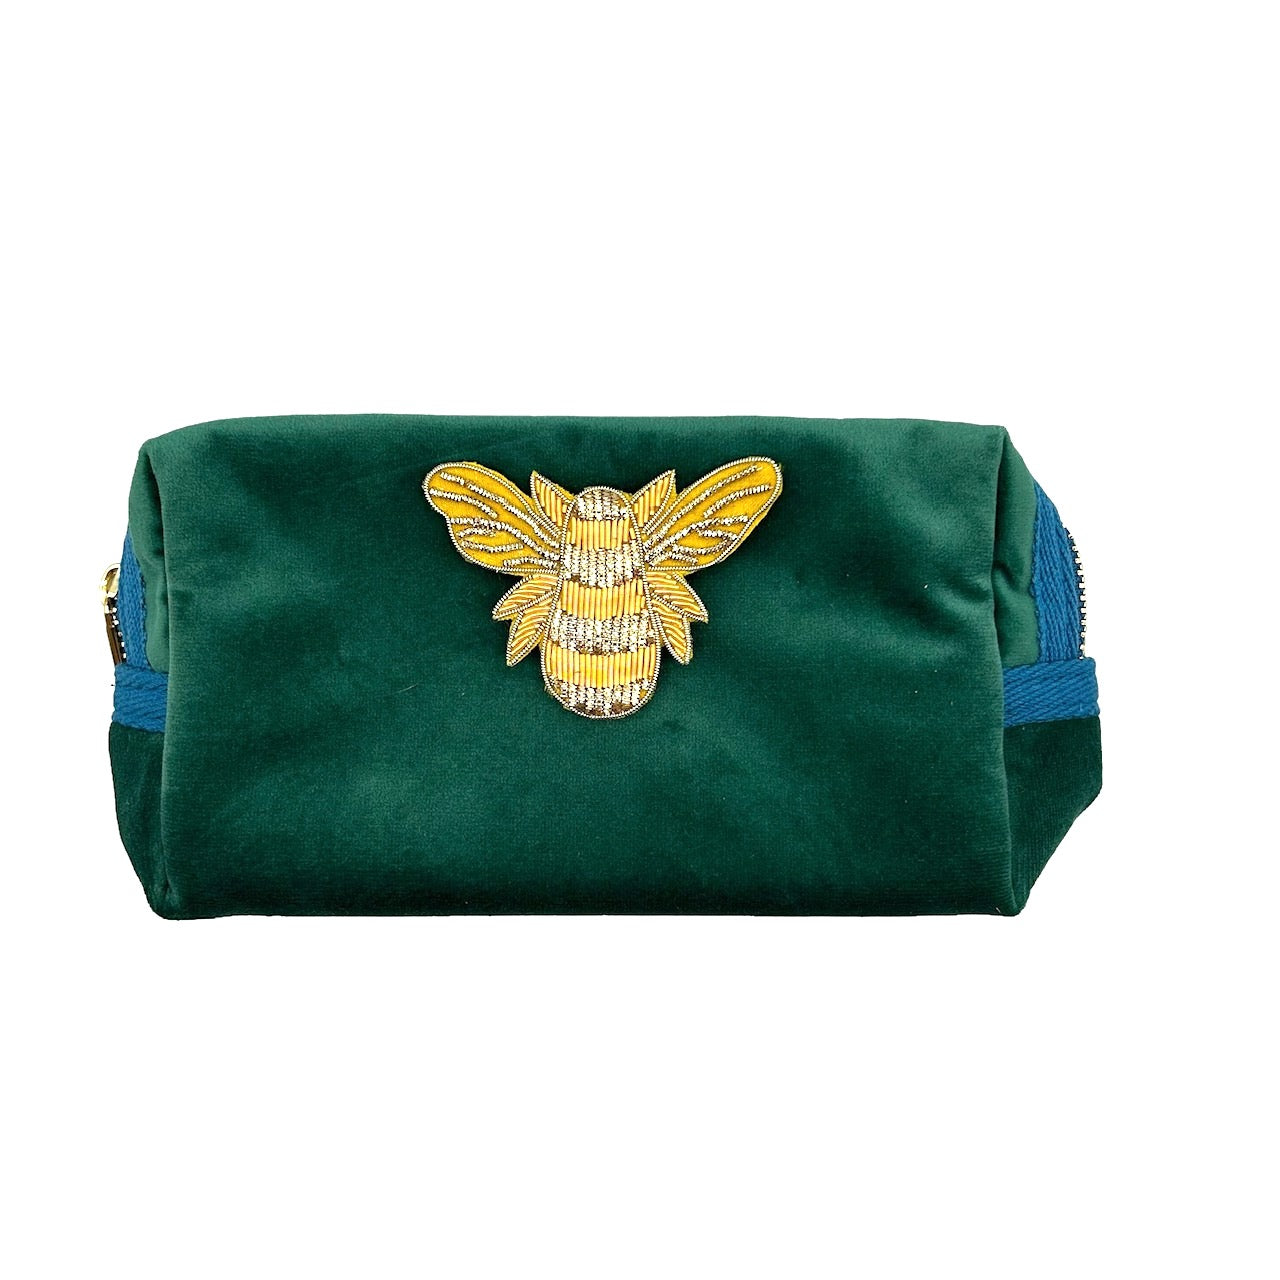 Green make-up bag & gold bee pin - recycled velvet